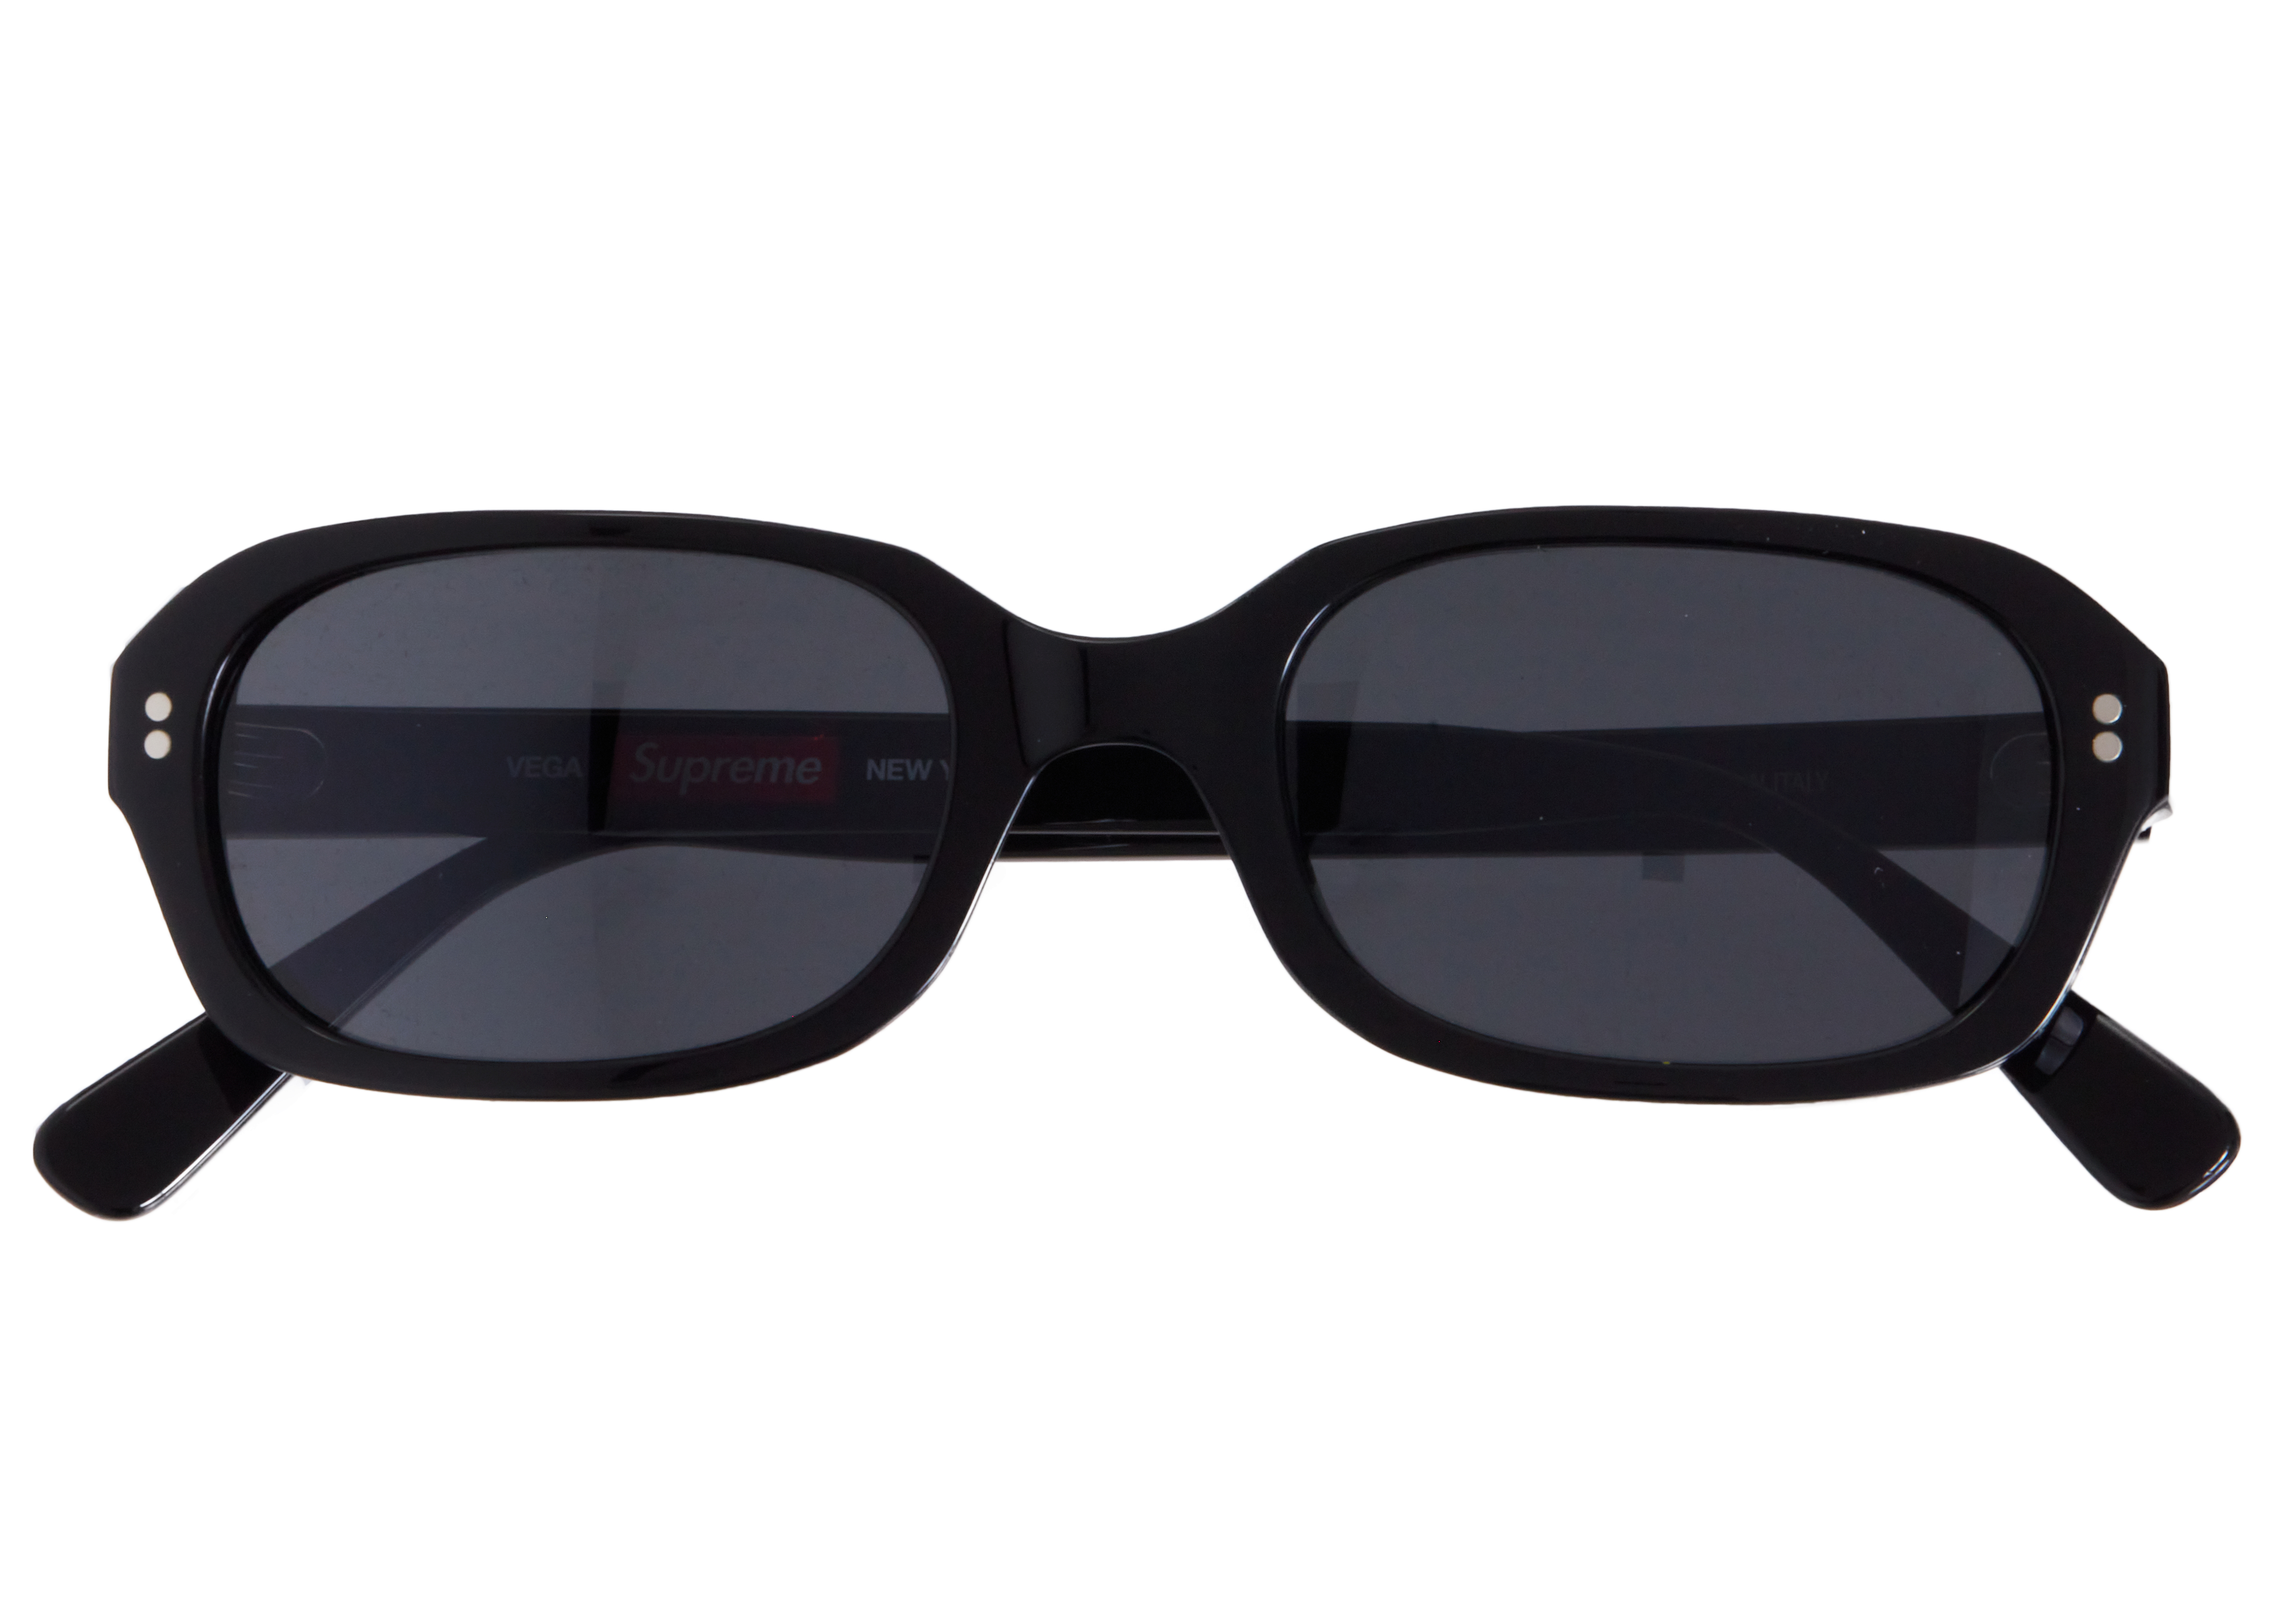 Supreme Vega Sunglasses Black メンズ - SS21 - JP